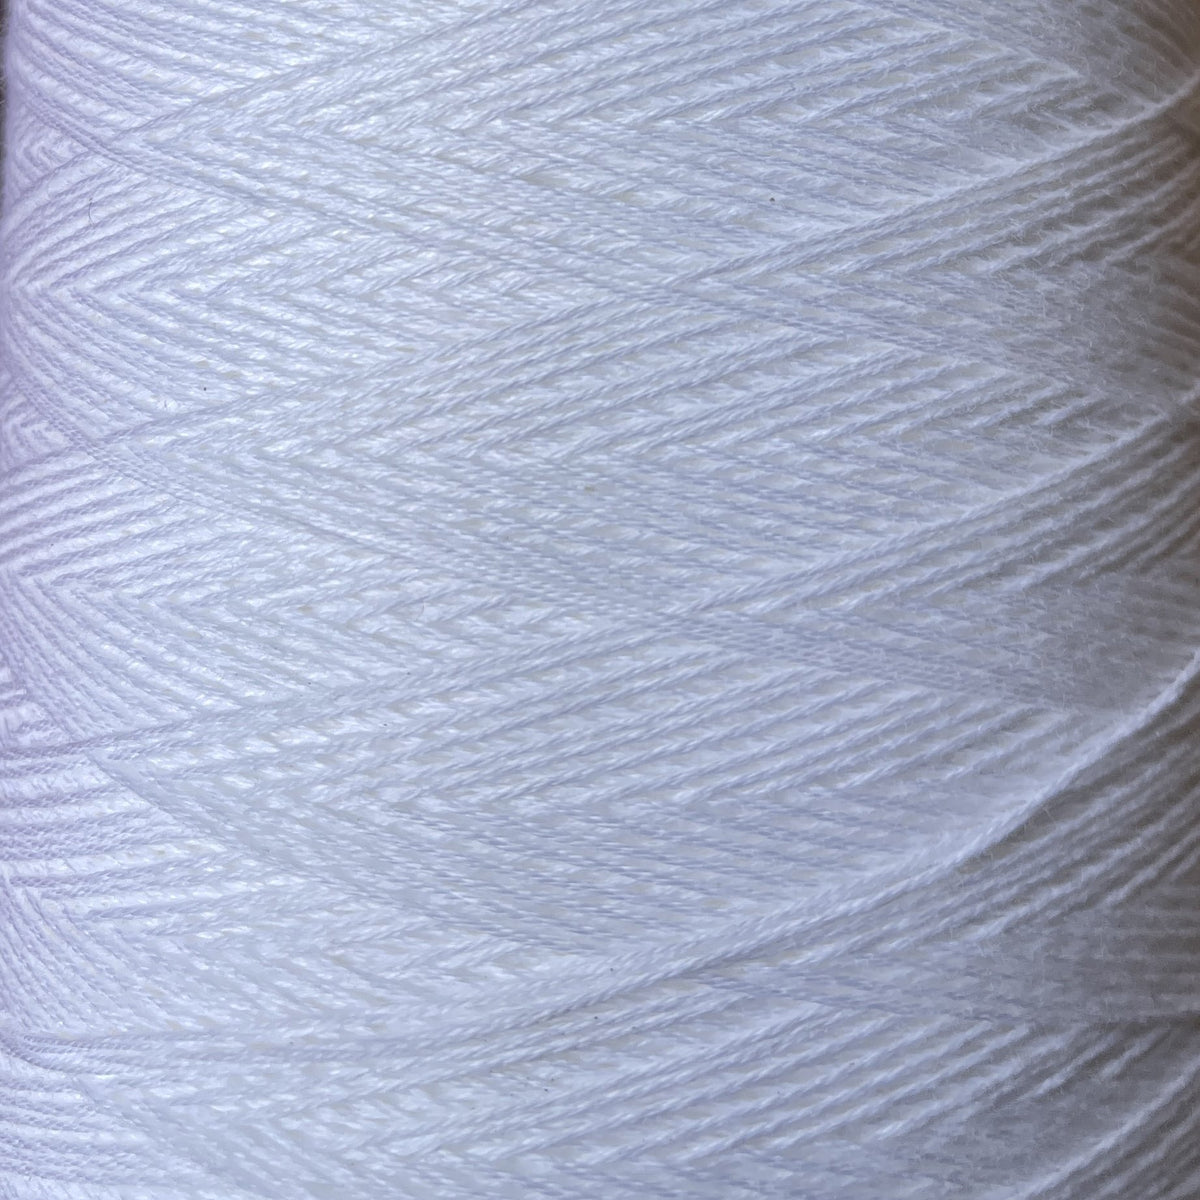 White Ada Fibres Australian Cotton Weaving Yarn Natural - Australian Made Australian Grown Australian Cotton